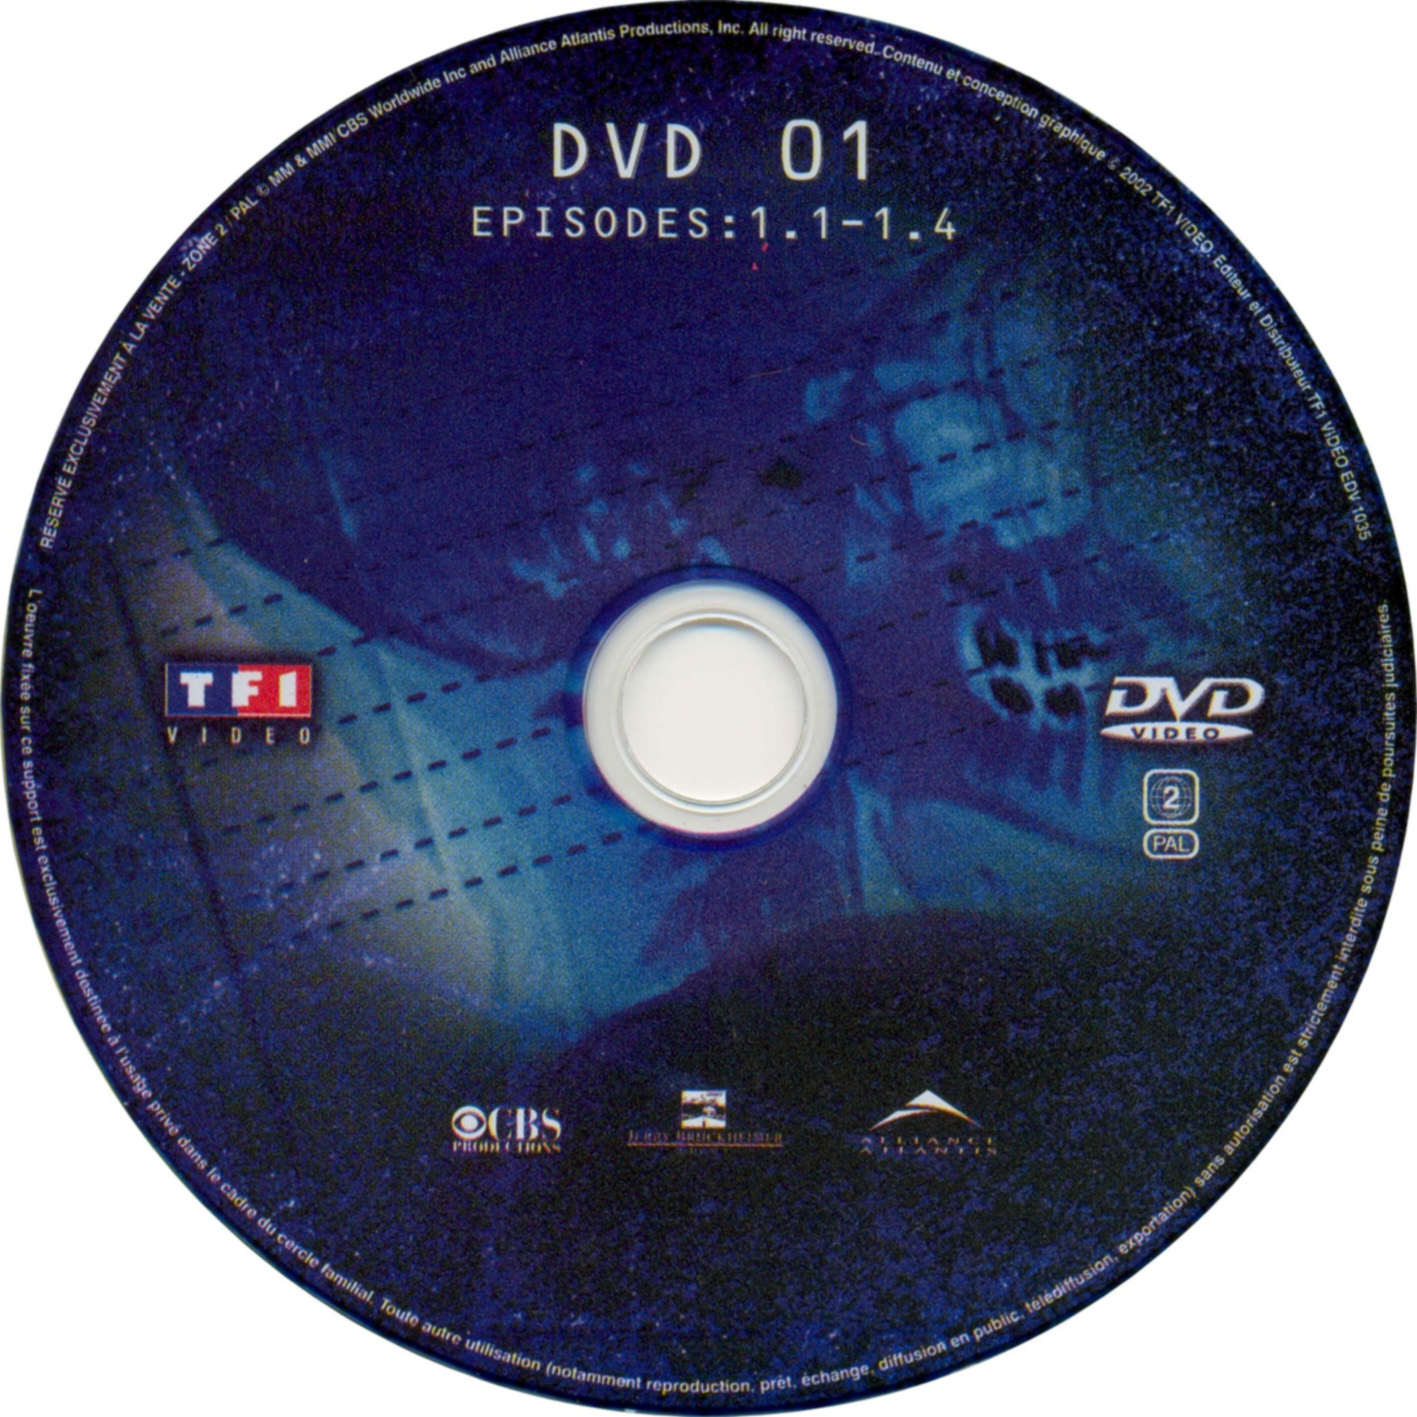 Les experts Saison 1 DISC 1 v2